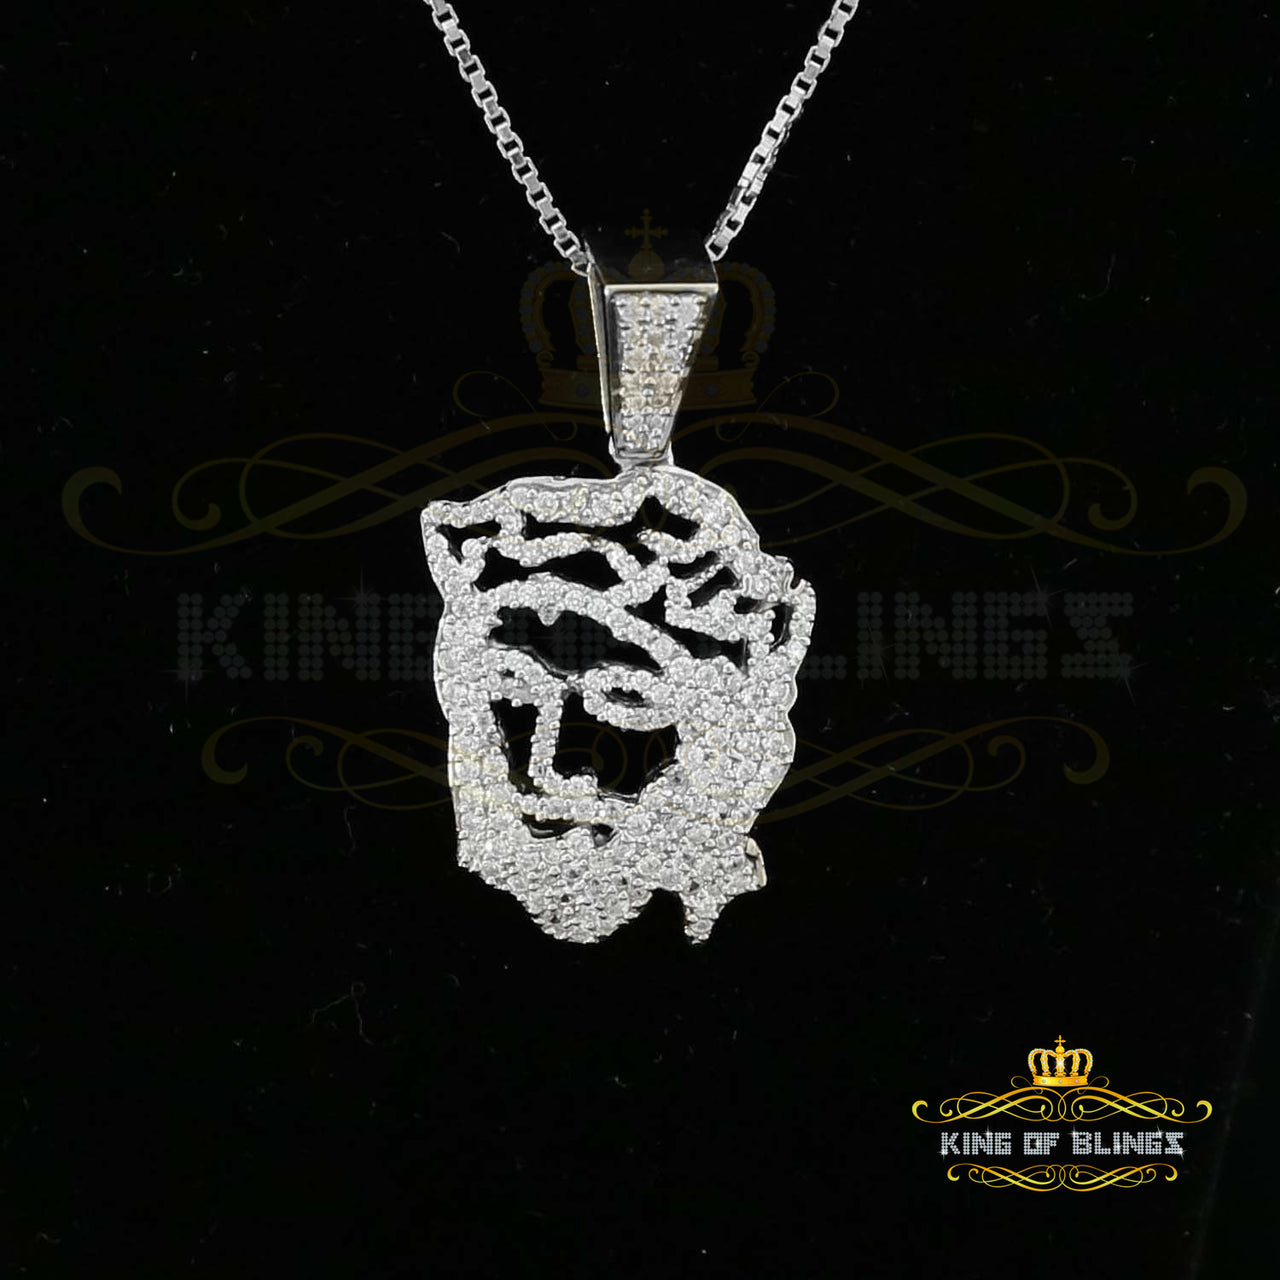 King Of Bling's King of Bling Jesus Face Sterling White Silver Pendant 0.90ct Cubic Zirconia KING OF BLINGS